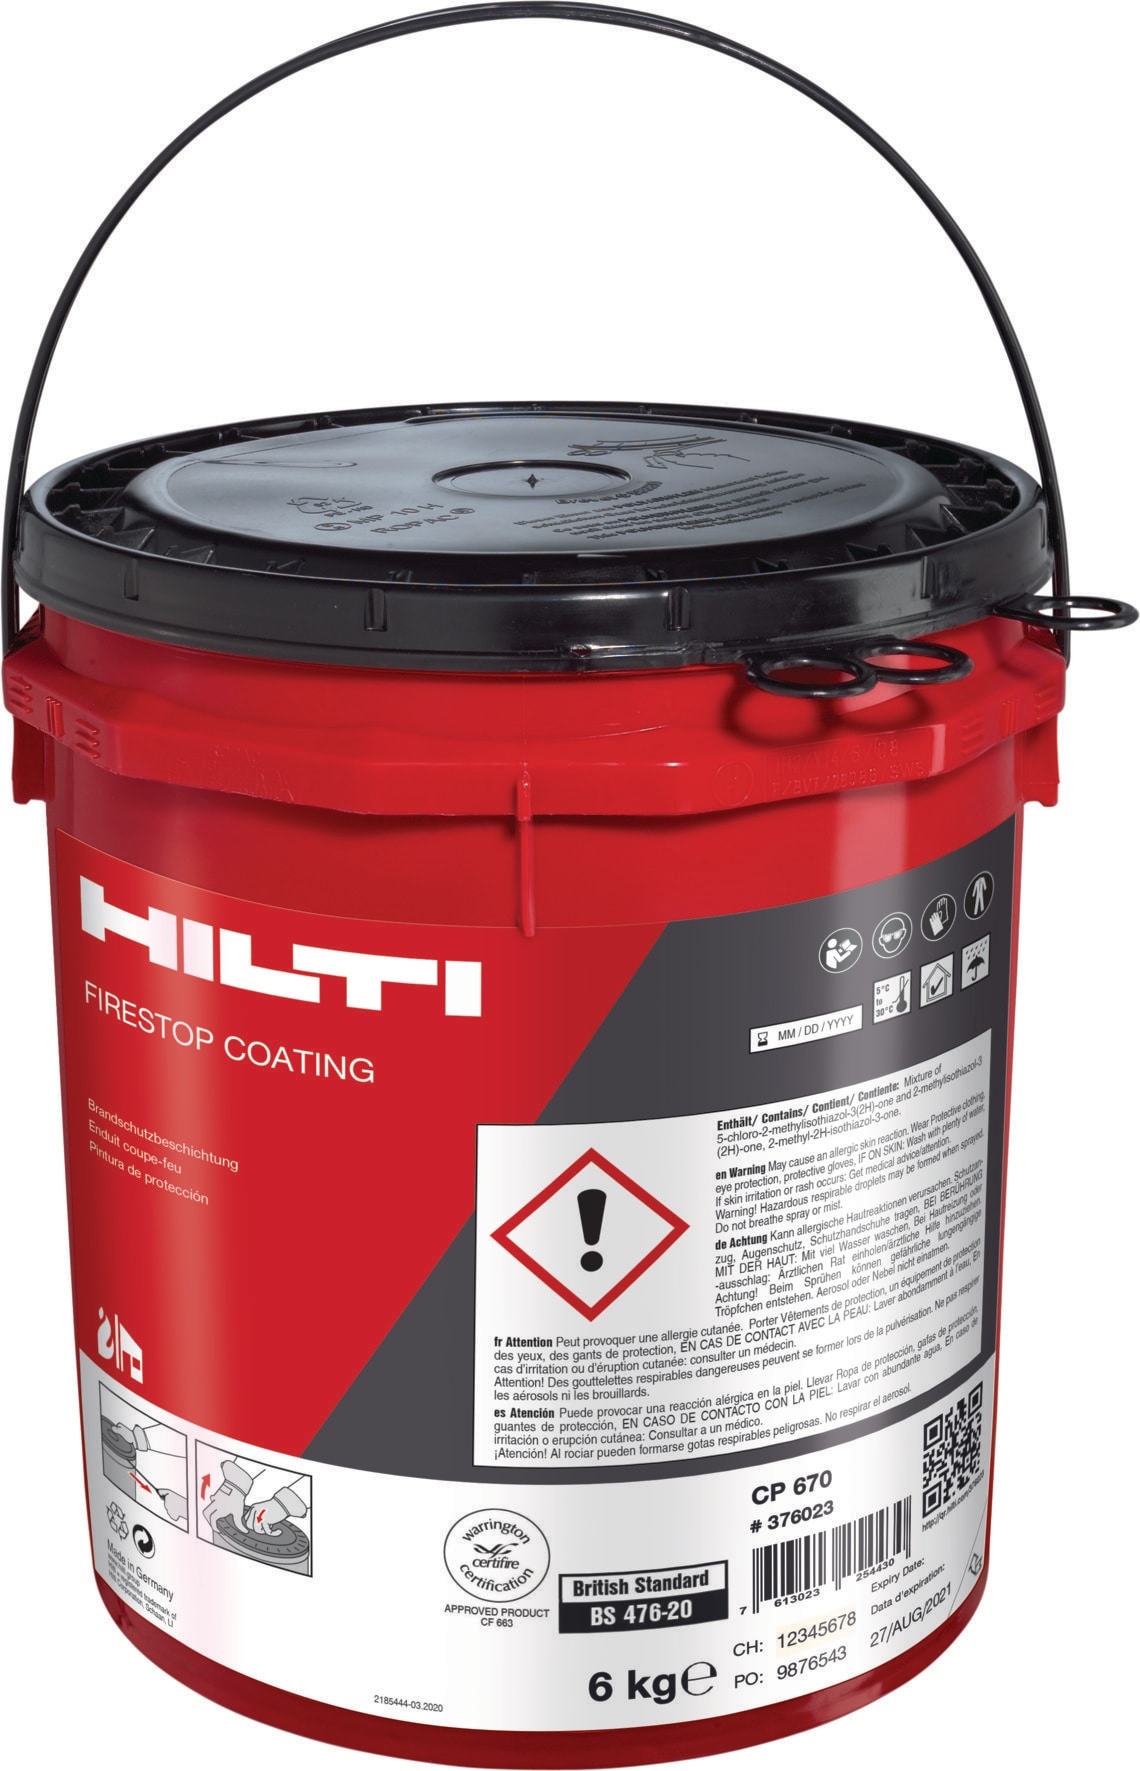 CP 670 Firestop coatings - Sealants, Sprays and Coatings - Hilti